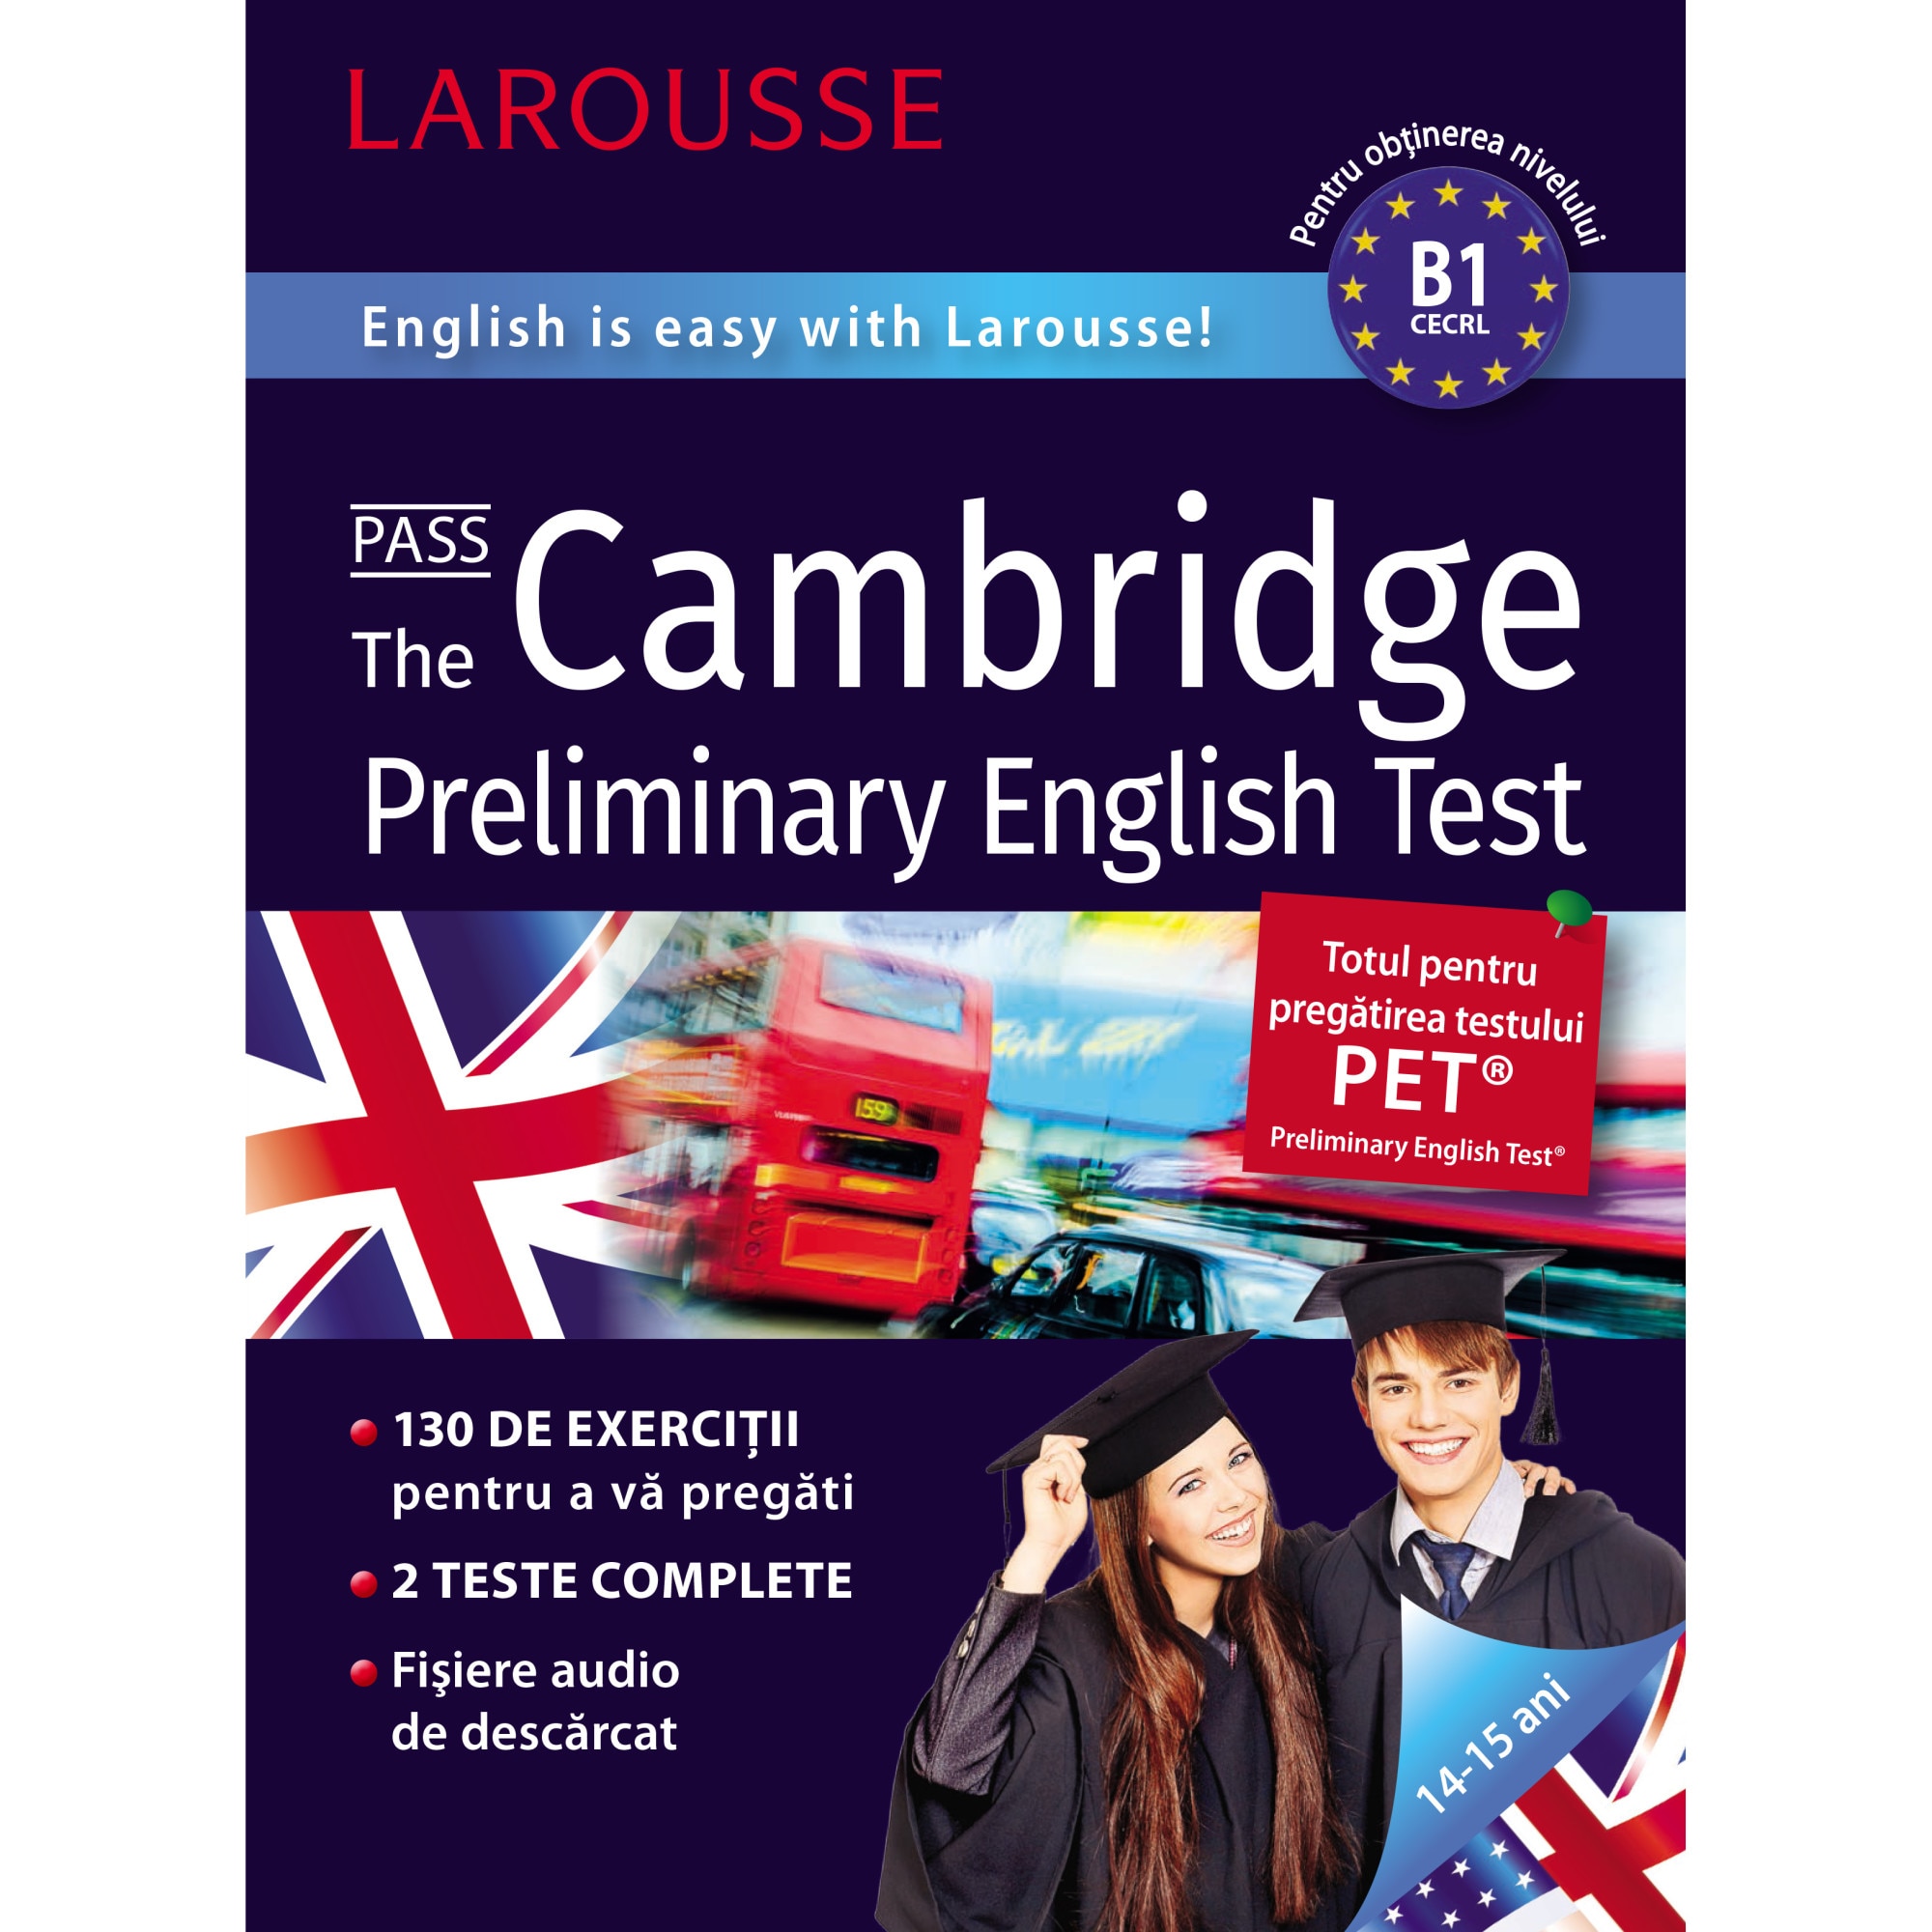 Preliminary English Test. Cambridge English preliminary. Cambridge preliminary English Test 1. Кембриджский словарь английского языка. Pet cambridge